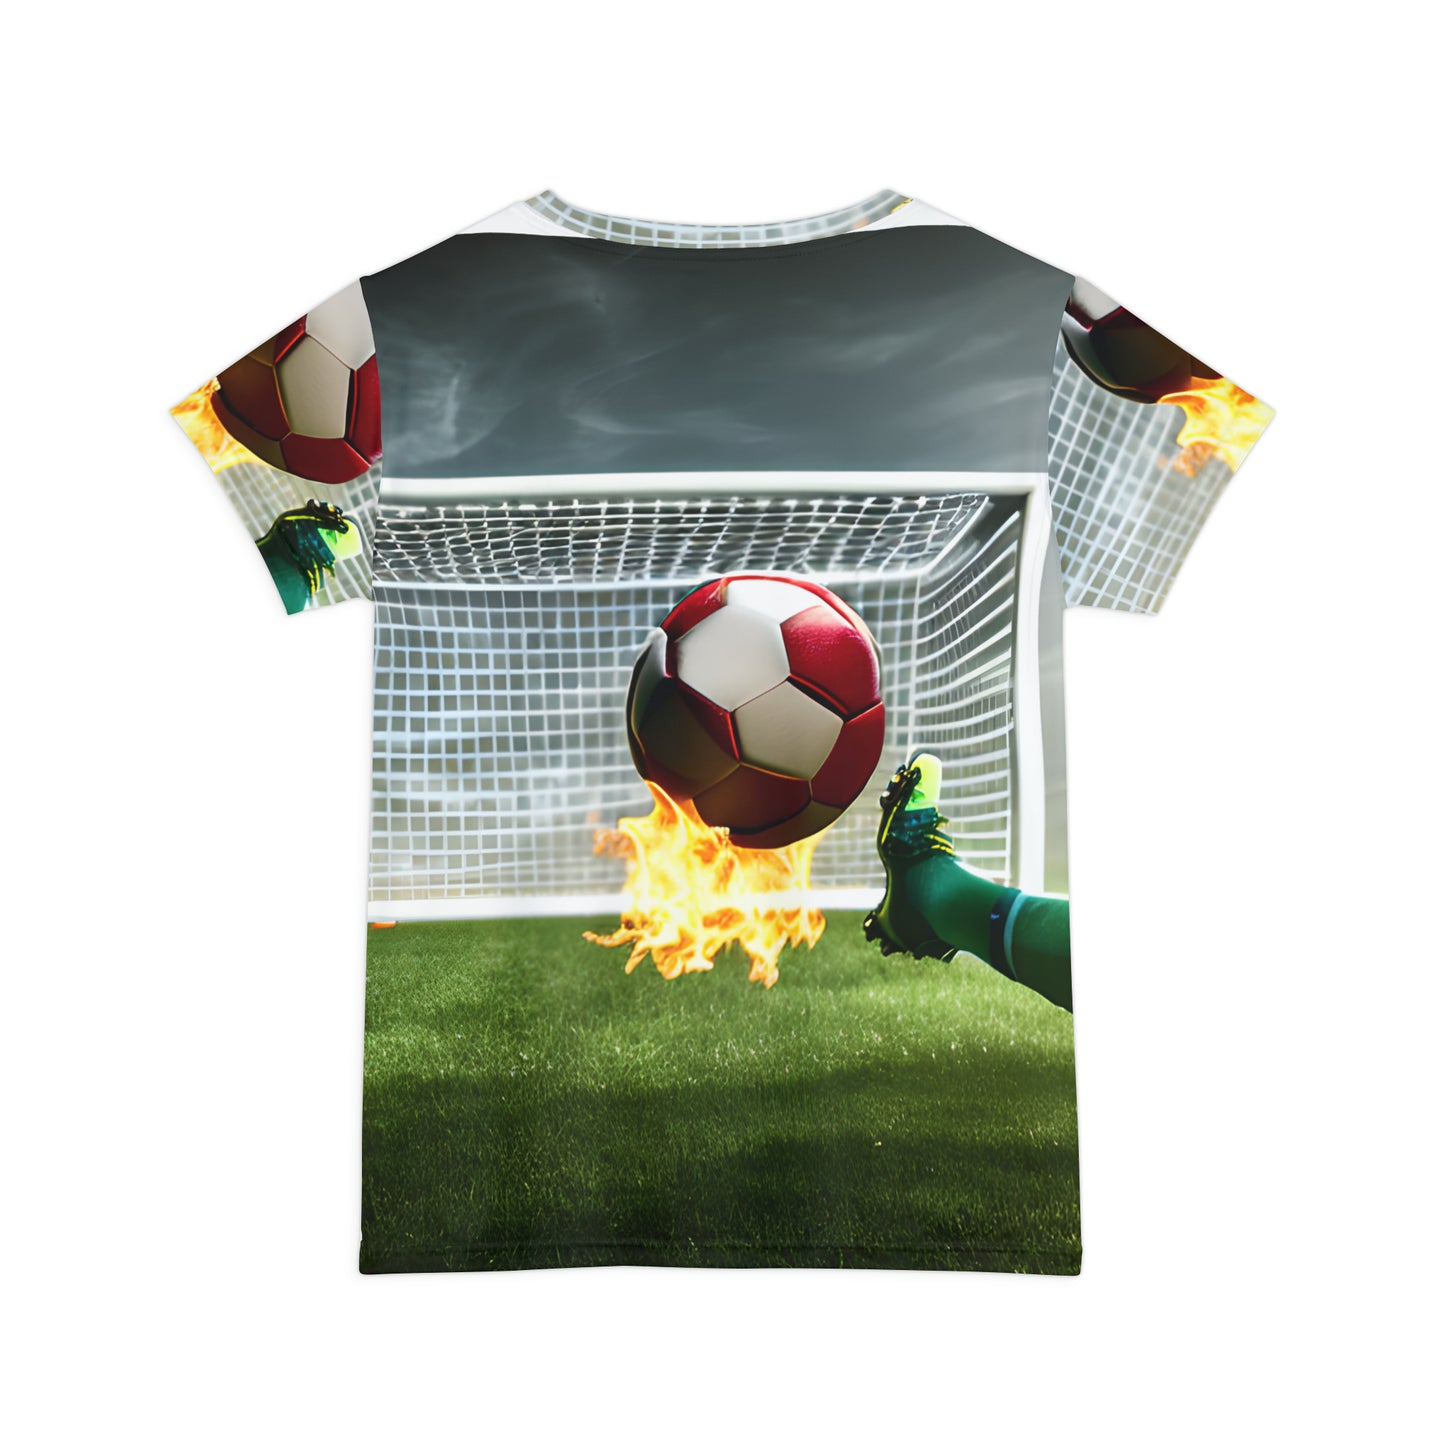 Blazing Soccer Ball - All Over Print Adult Women's Short Sleeve Shirt